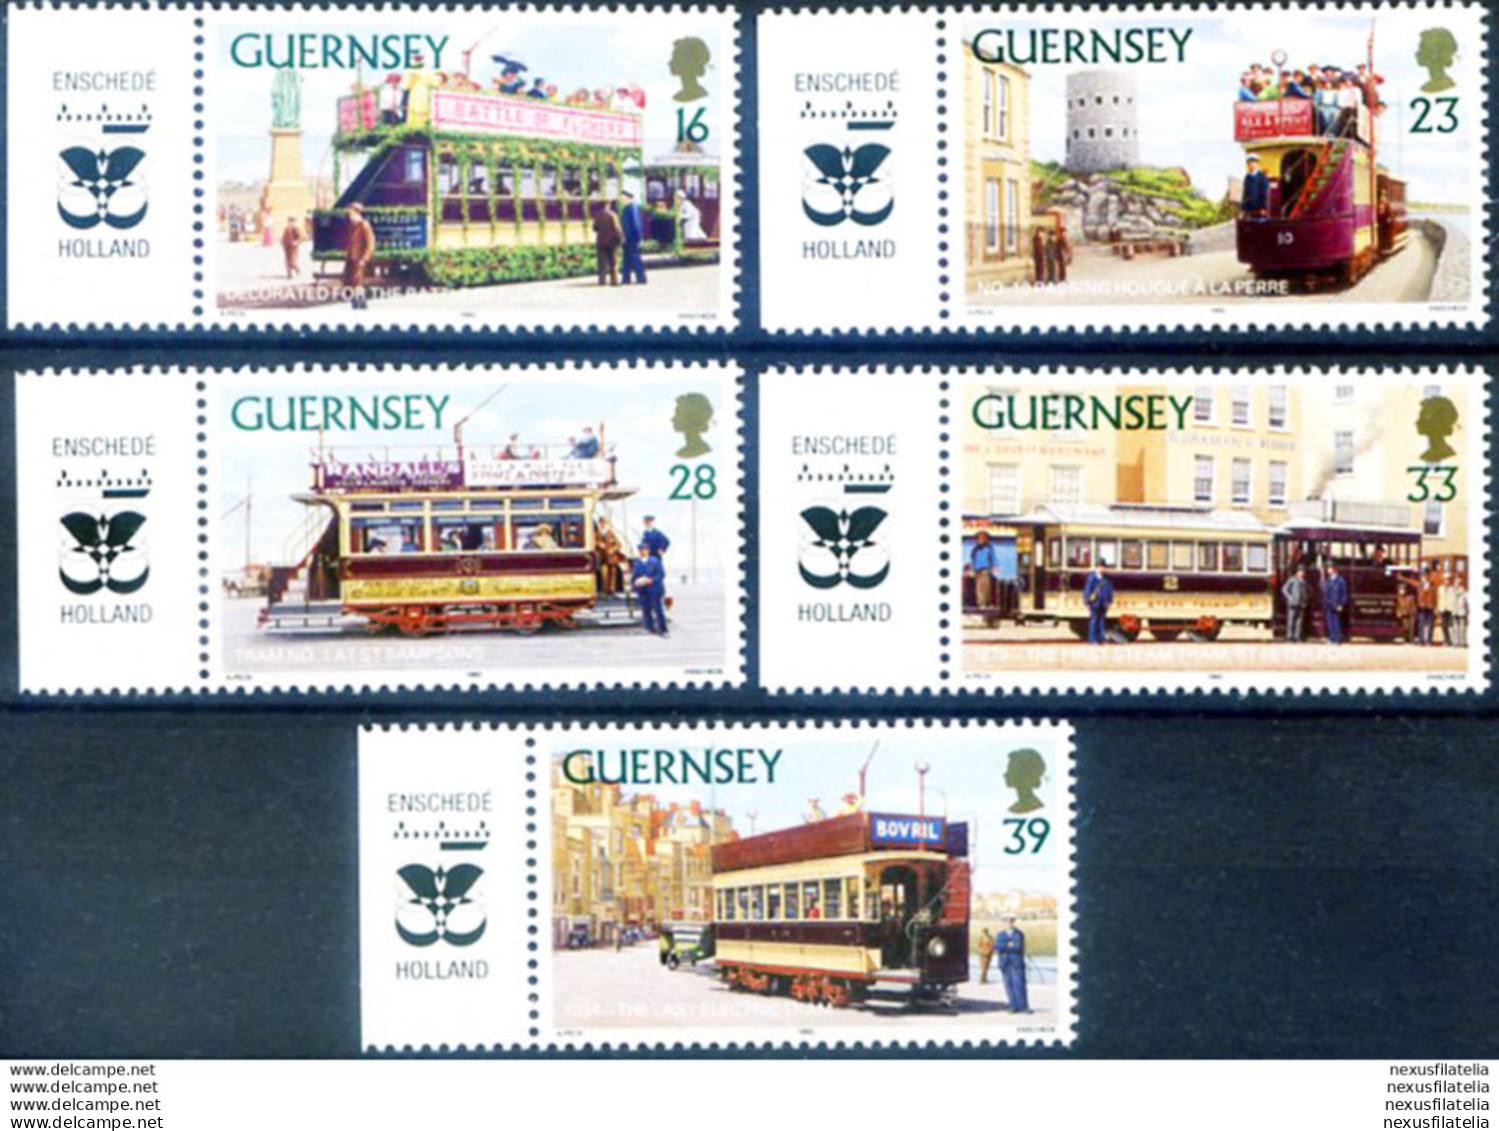 Trasporti. Tram Locali 1992. - Guernsey